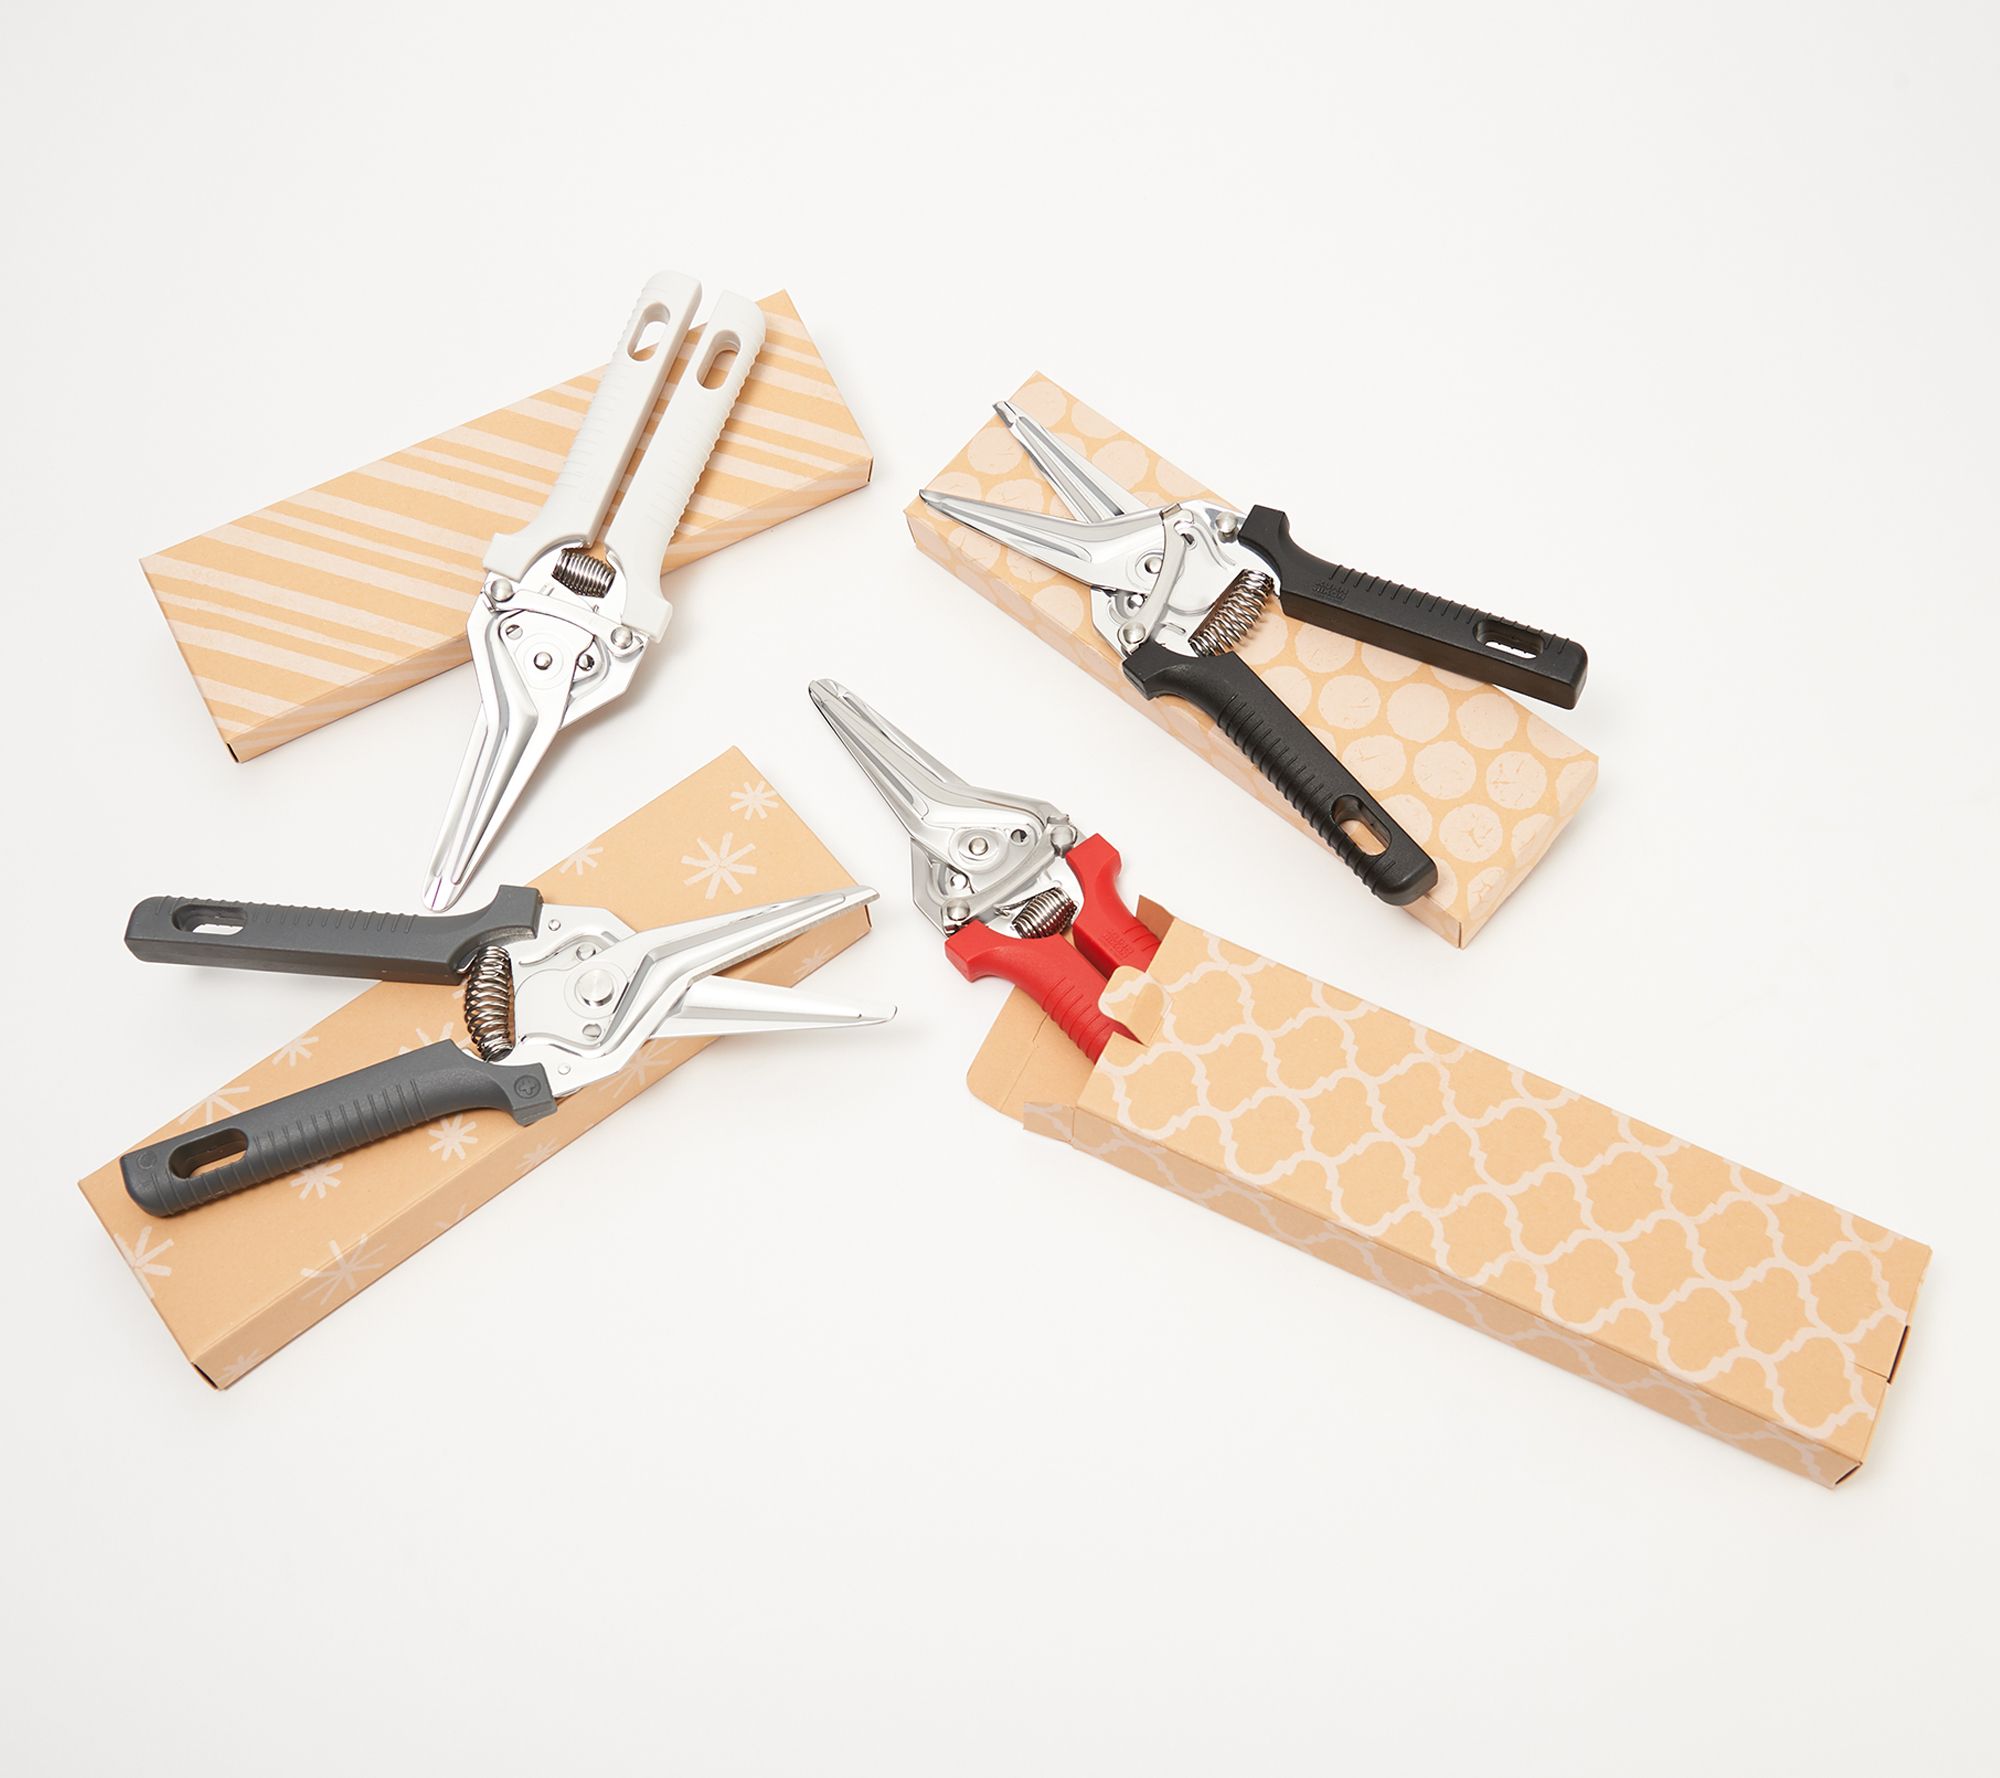 Kuhn Rikon Household Shears - Scissors - Stuff for the Kitchen